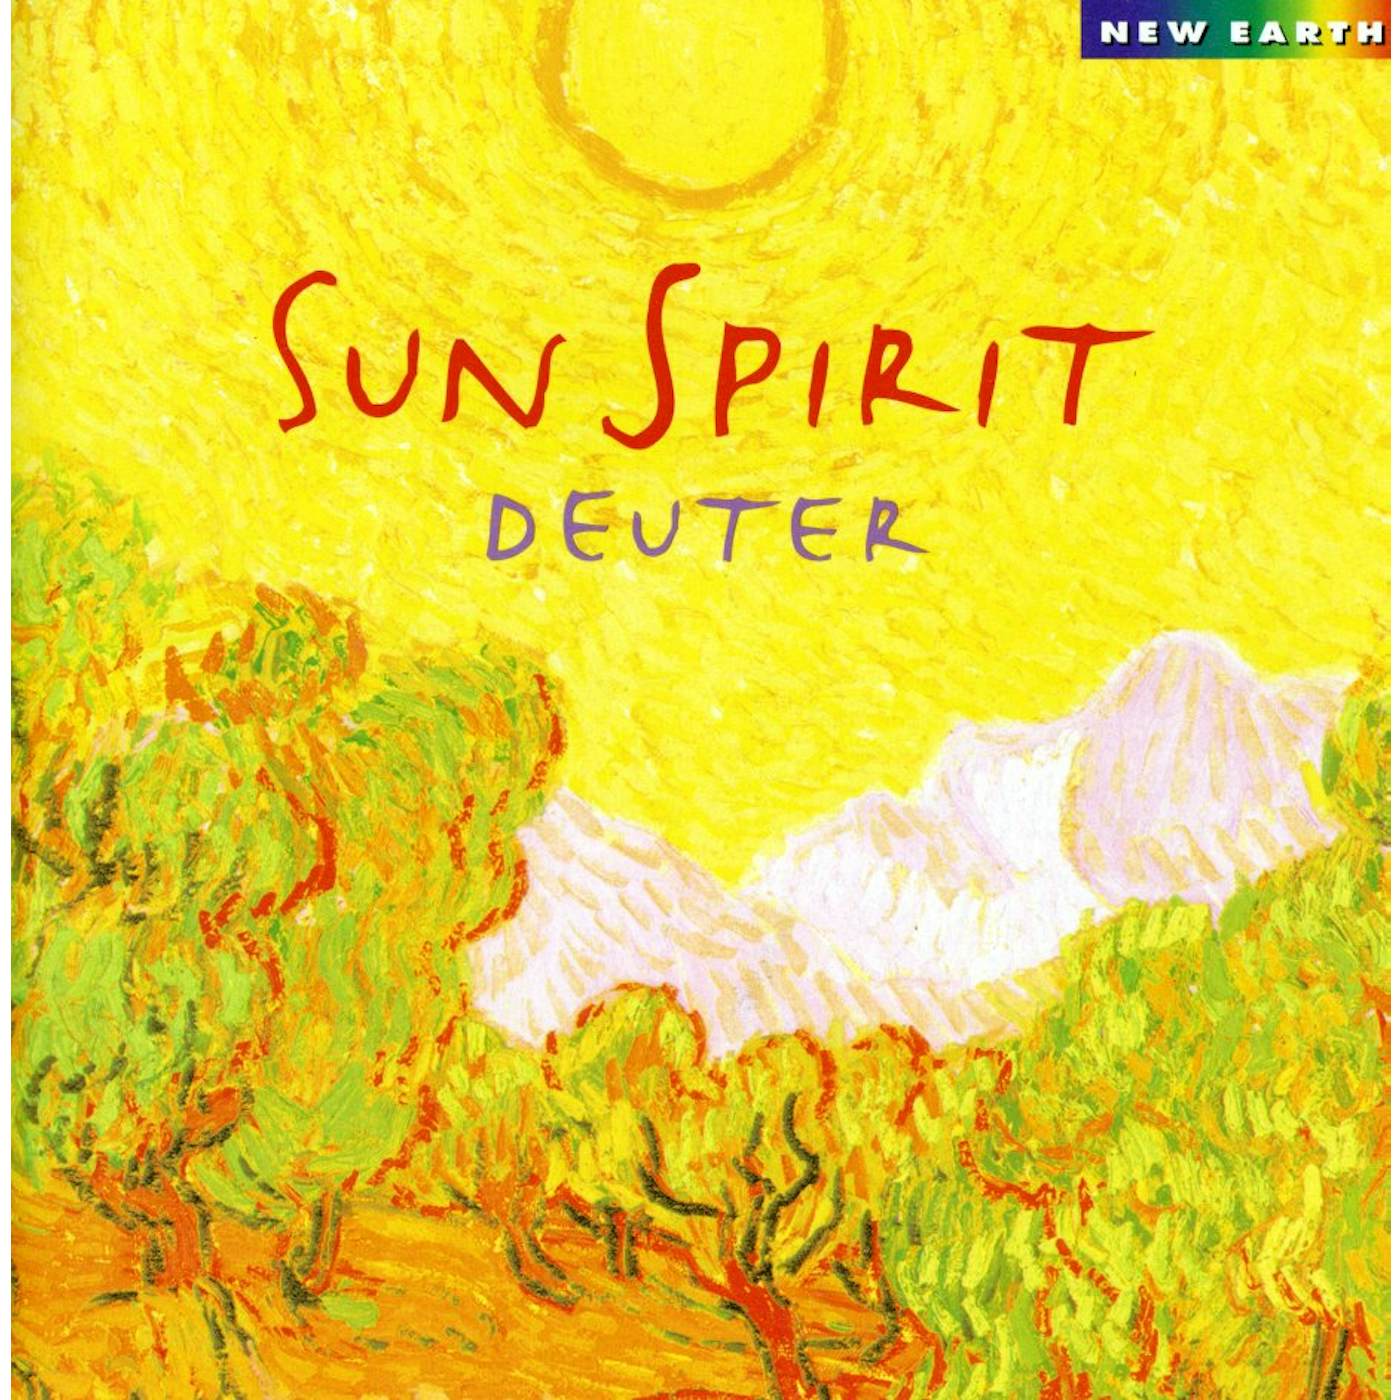 Deuter SUN SPIRIT CD